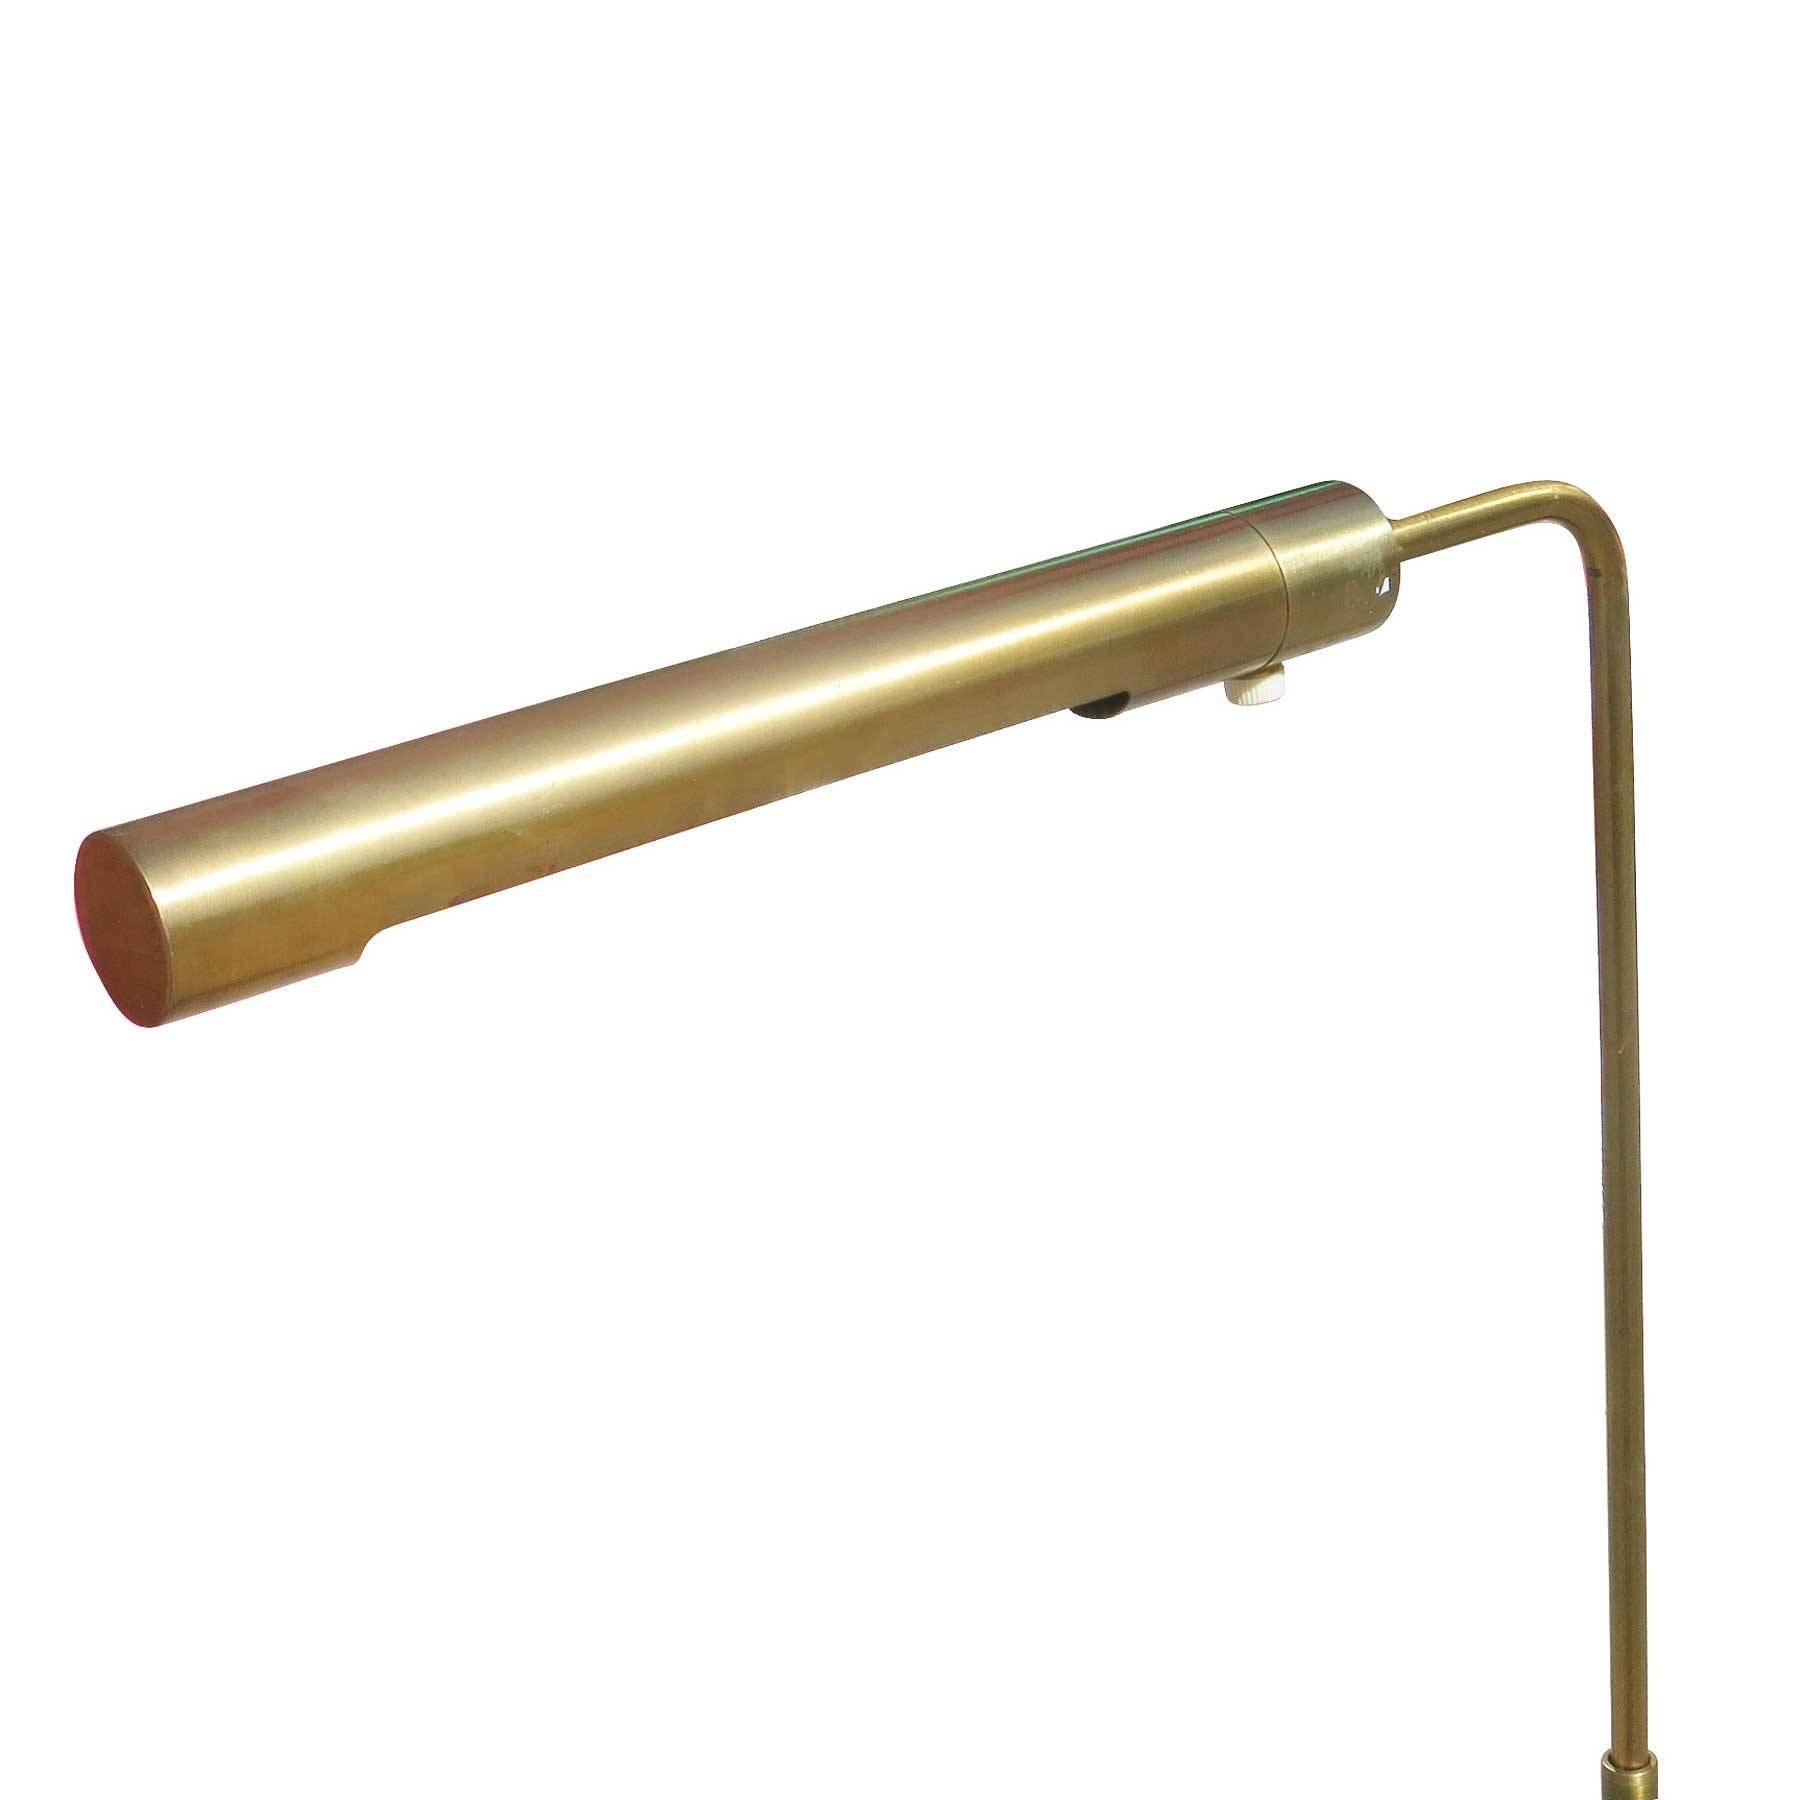 Brass floor lamp with 15